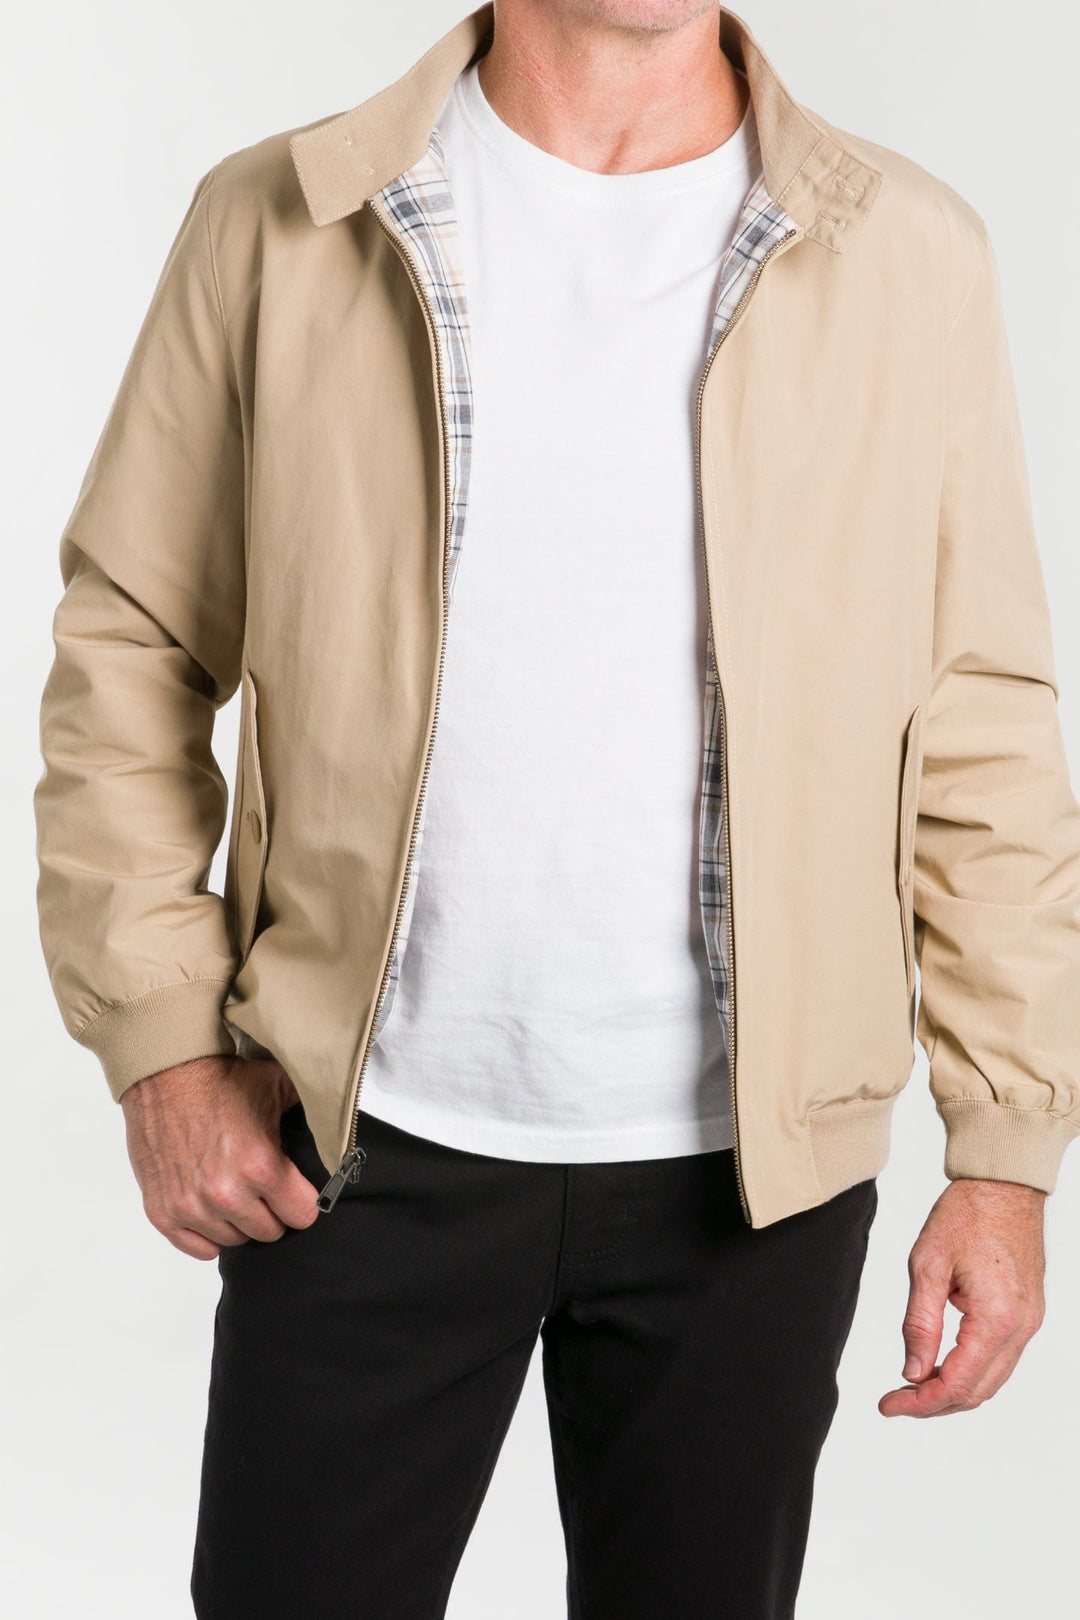 Buy Khaki Harrington Jacket for Short Men | Ash & Erie   Peacoat